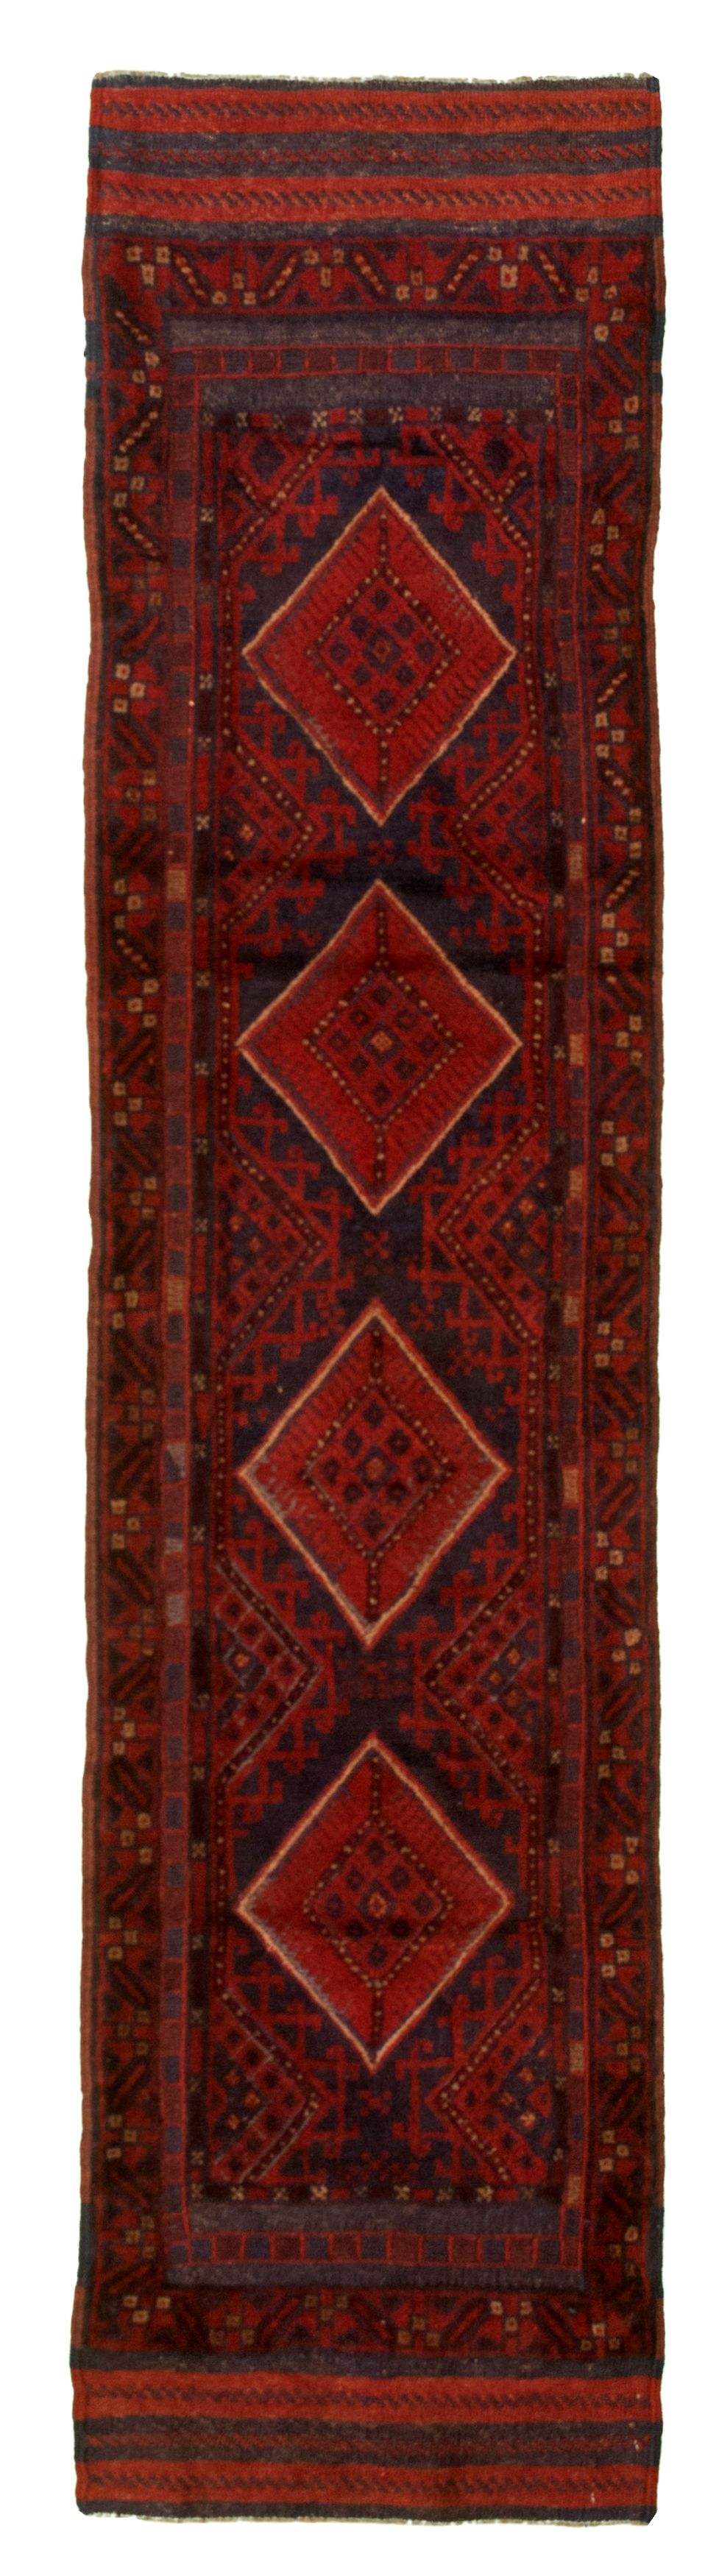 Hand-knotted Tajik Caucasian Red Wool Rug 2'2" x 8'8"  Size: 2'2" x 8'8"  